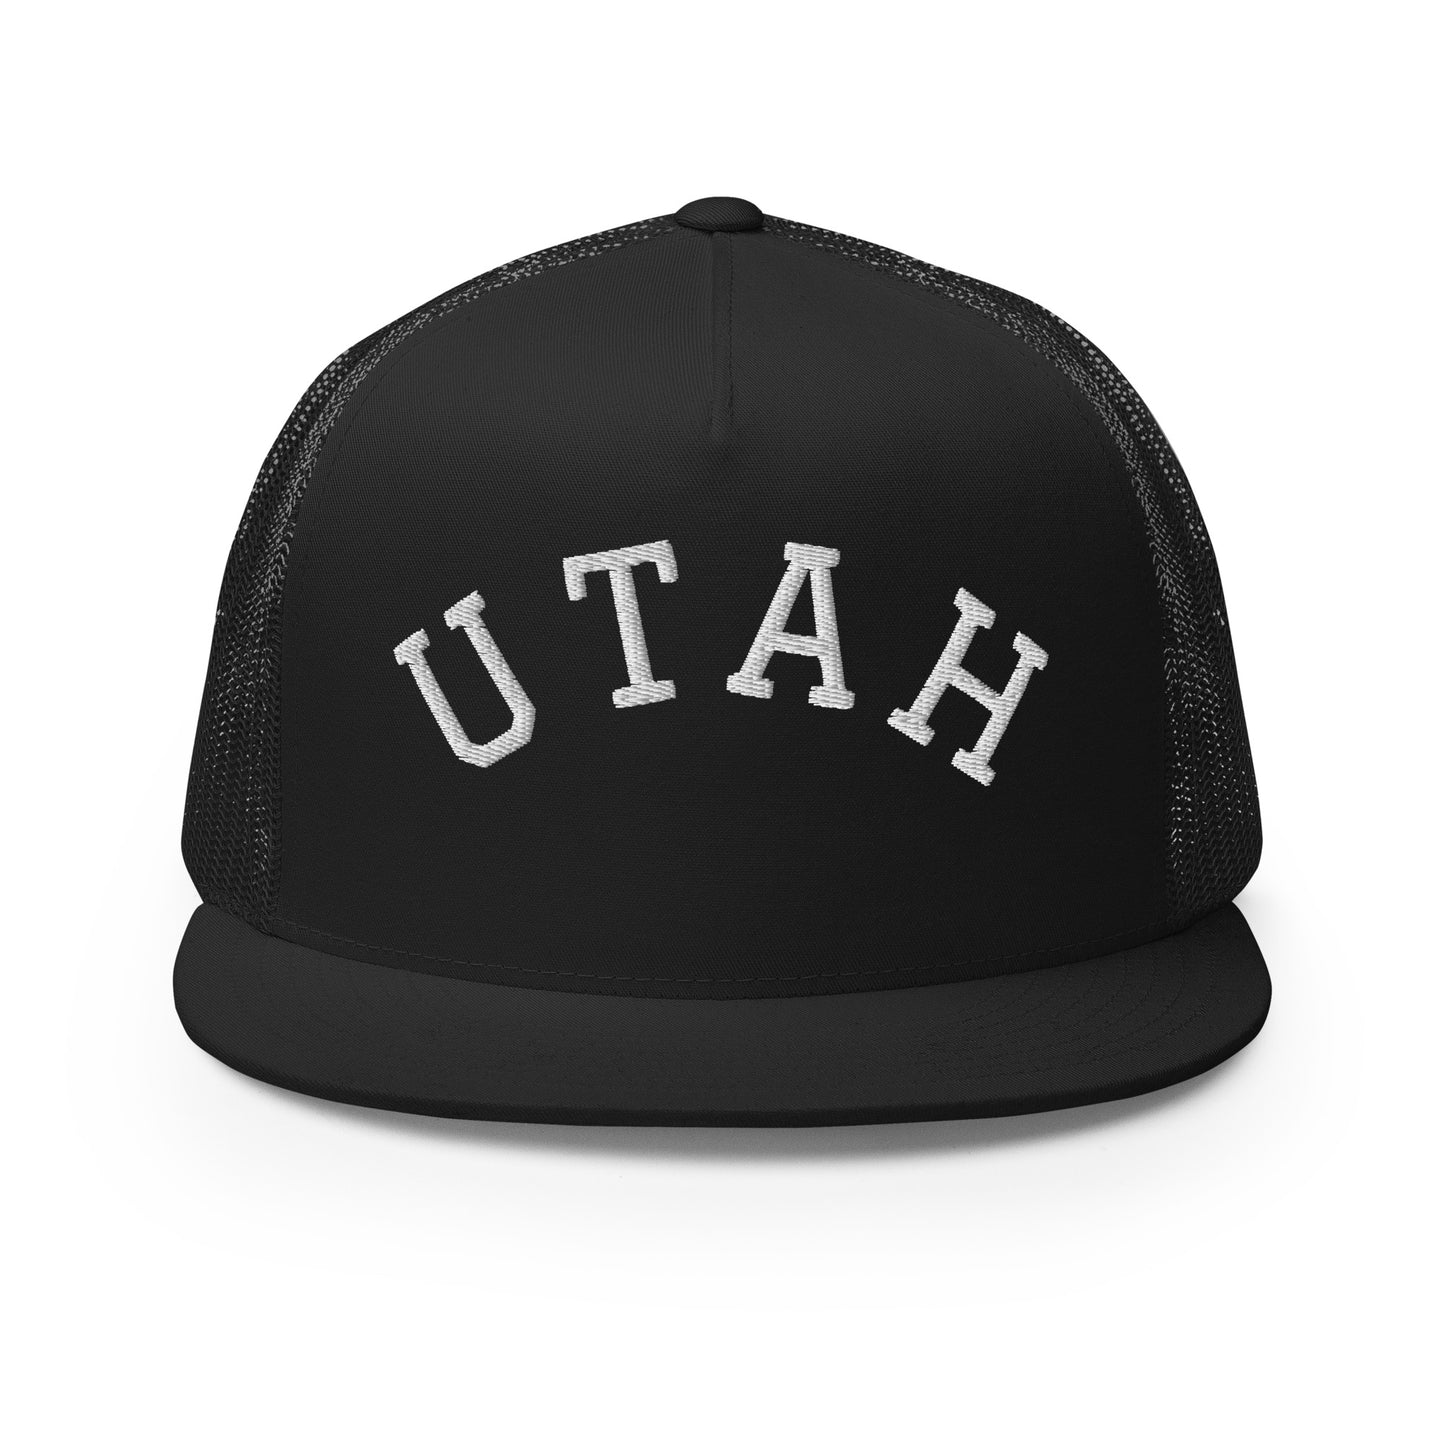 Utah Arch High 5 Panel A-Frame Snapback Trucker Hat